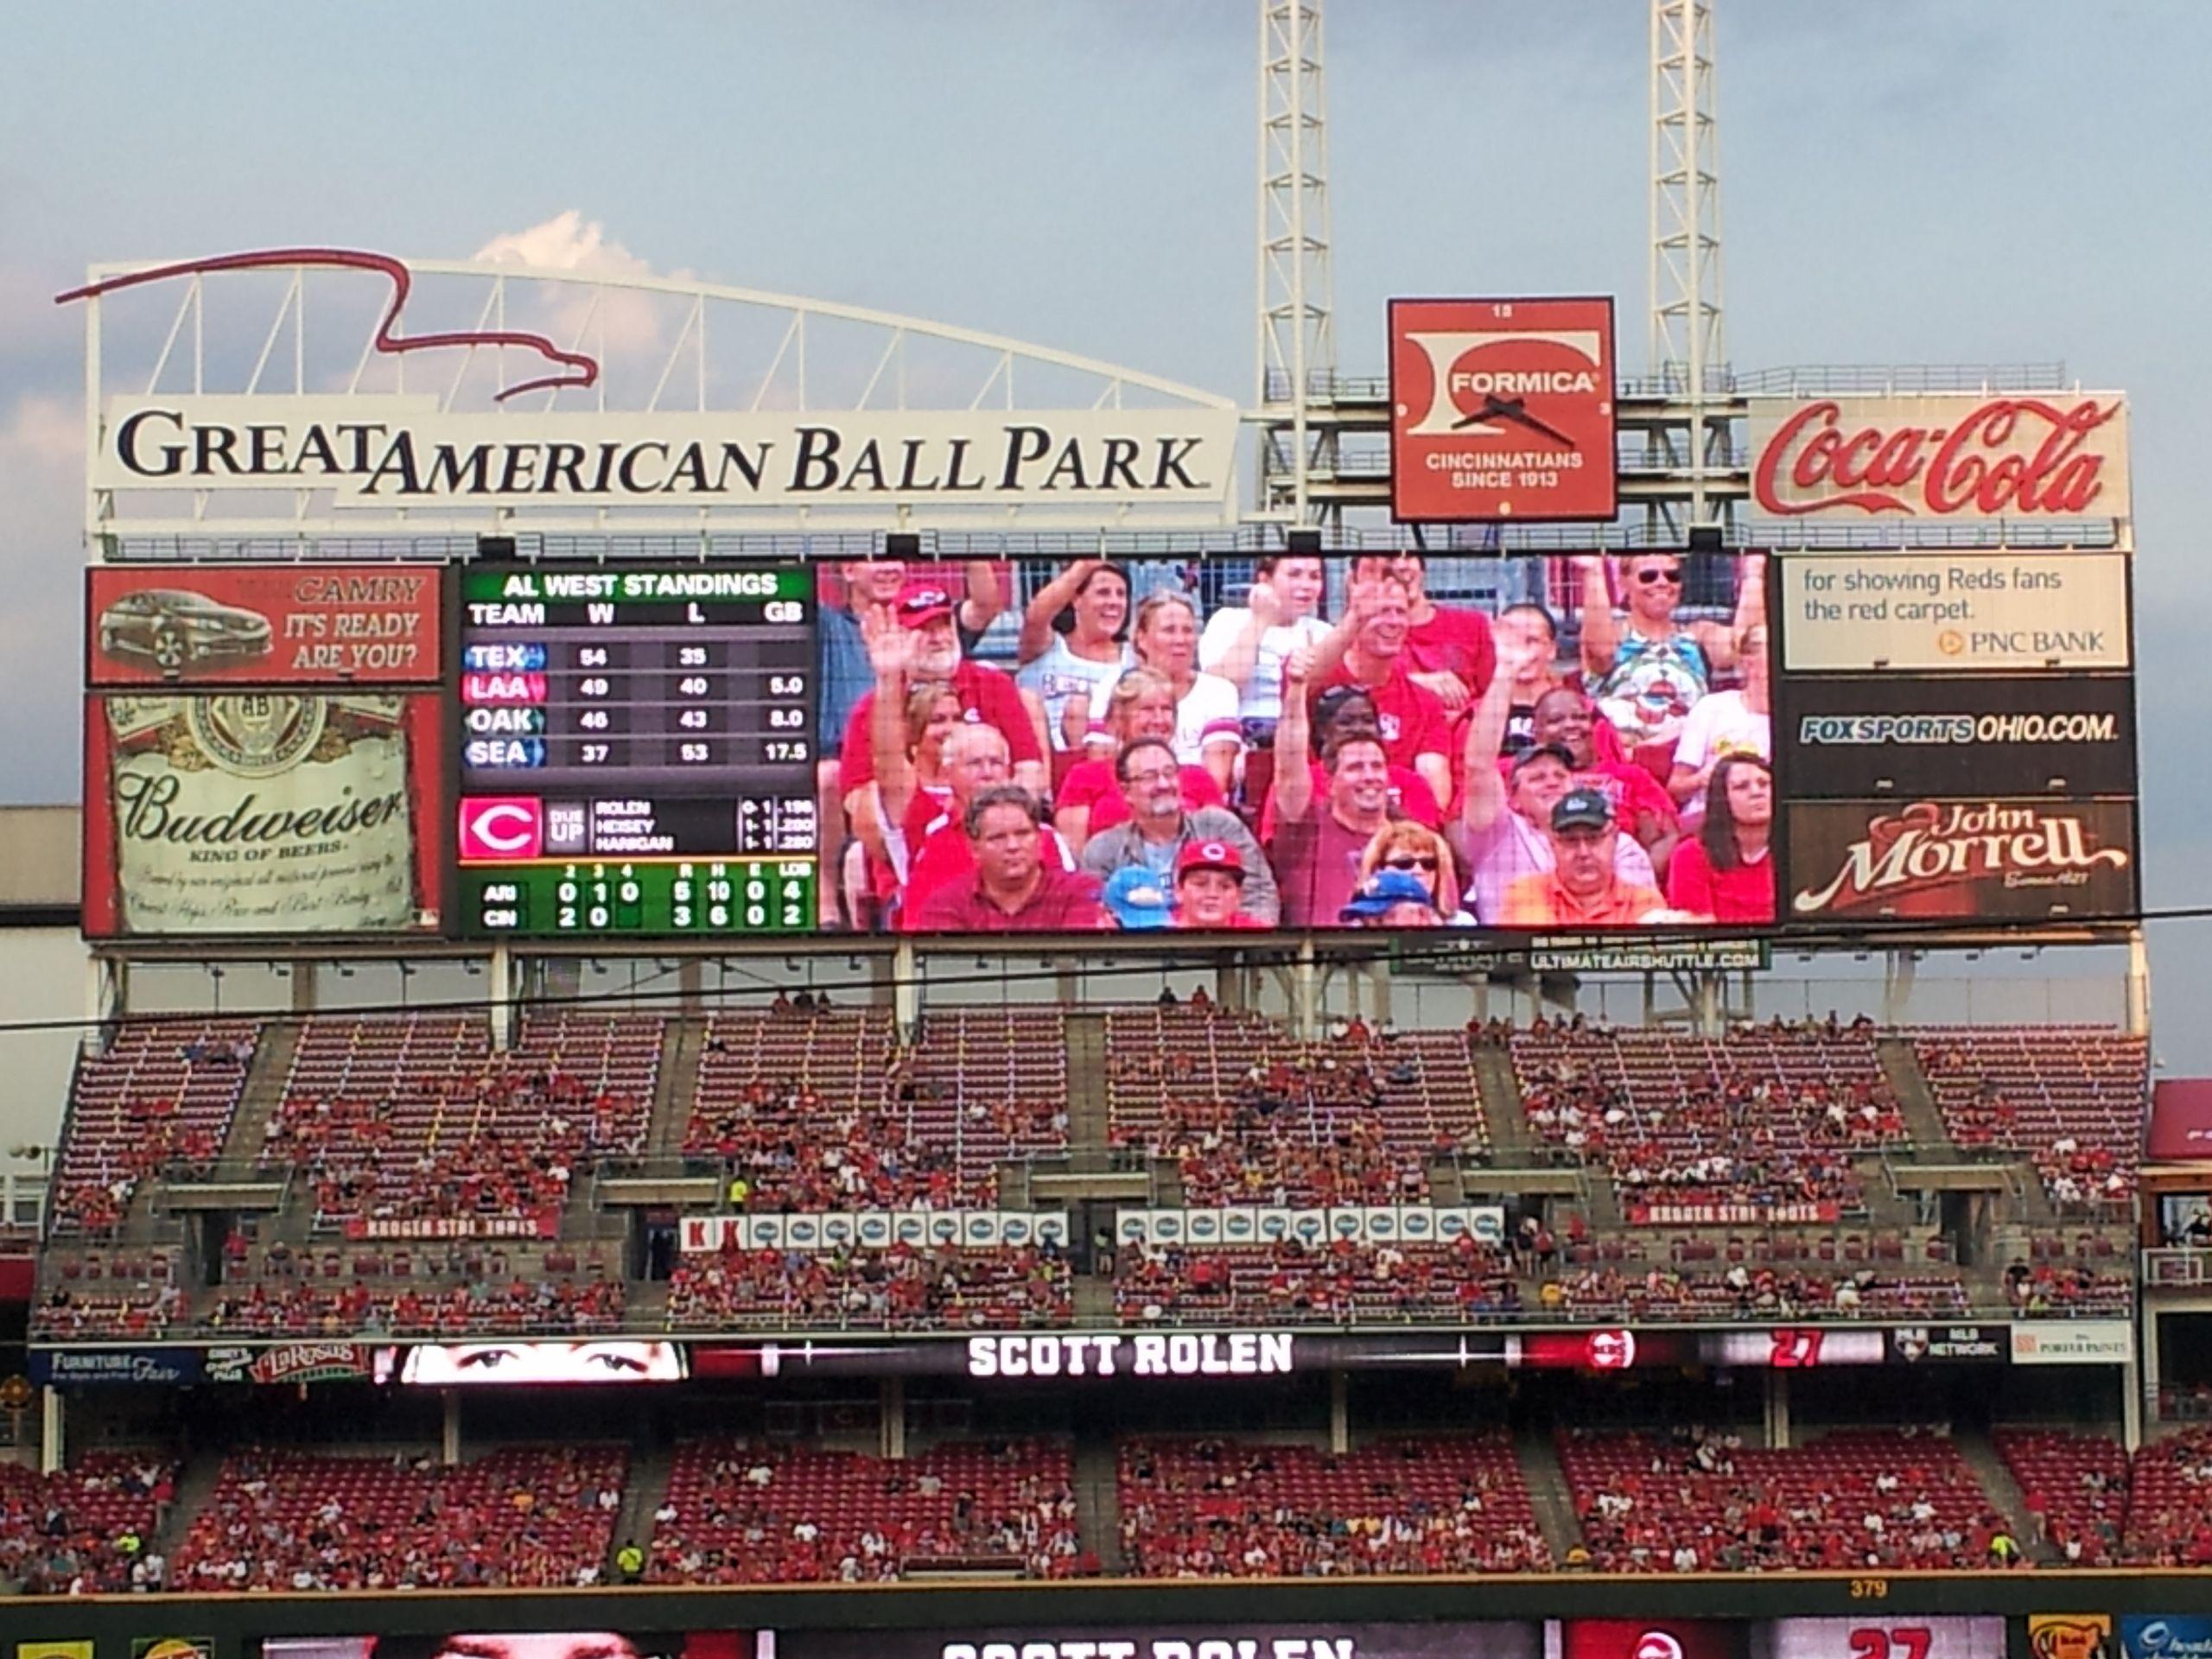 Cincinnati Reds image scoreboard HD wallpaper and background photo